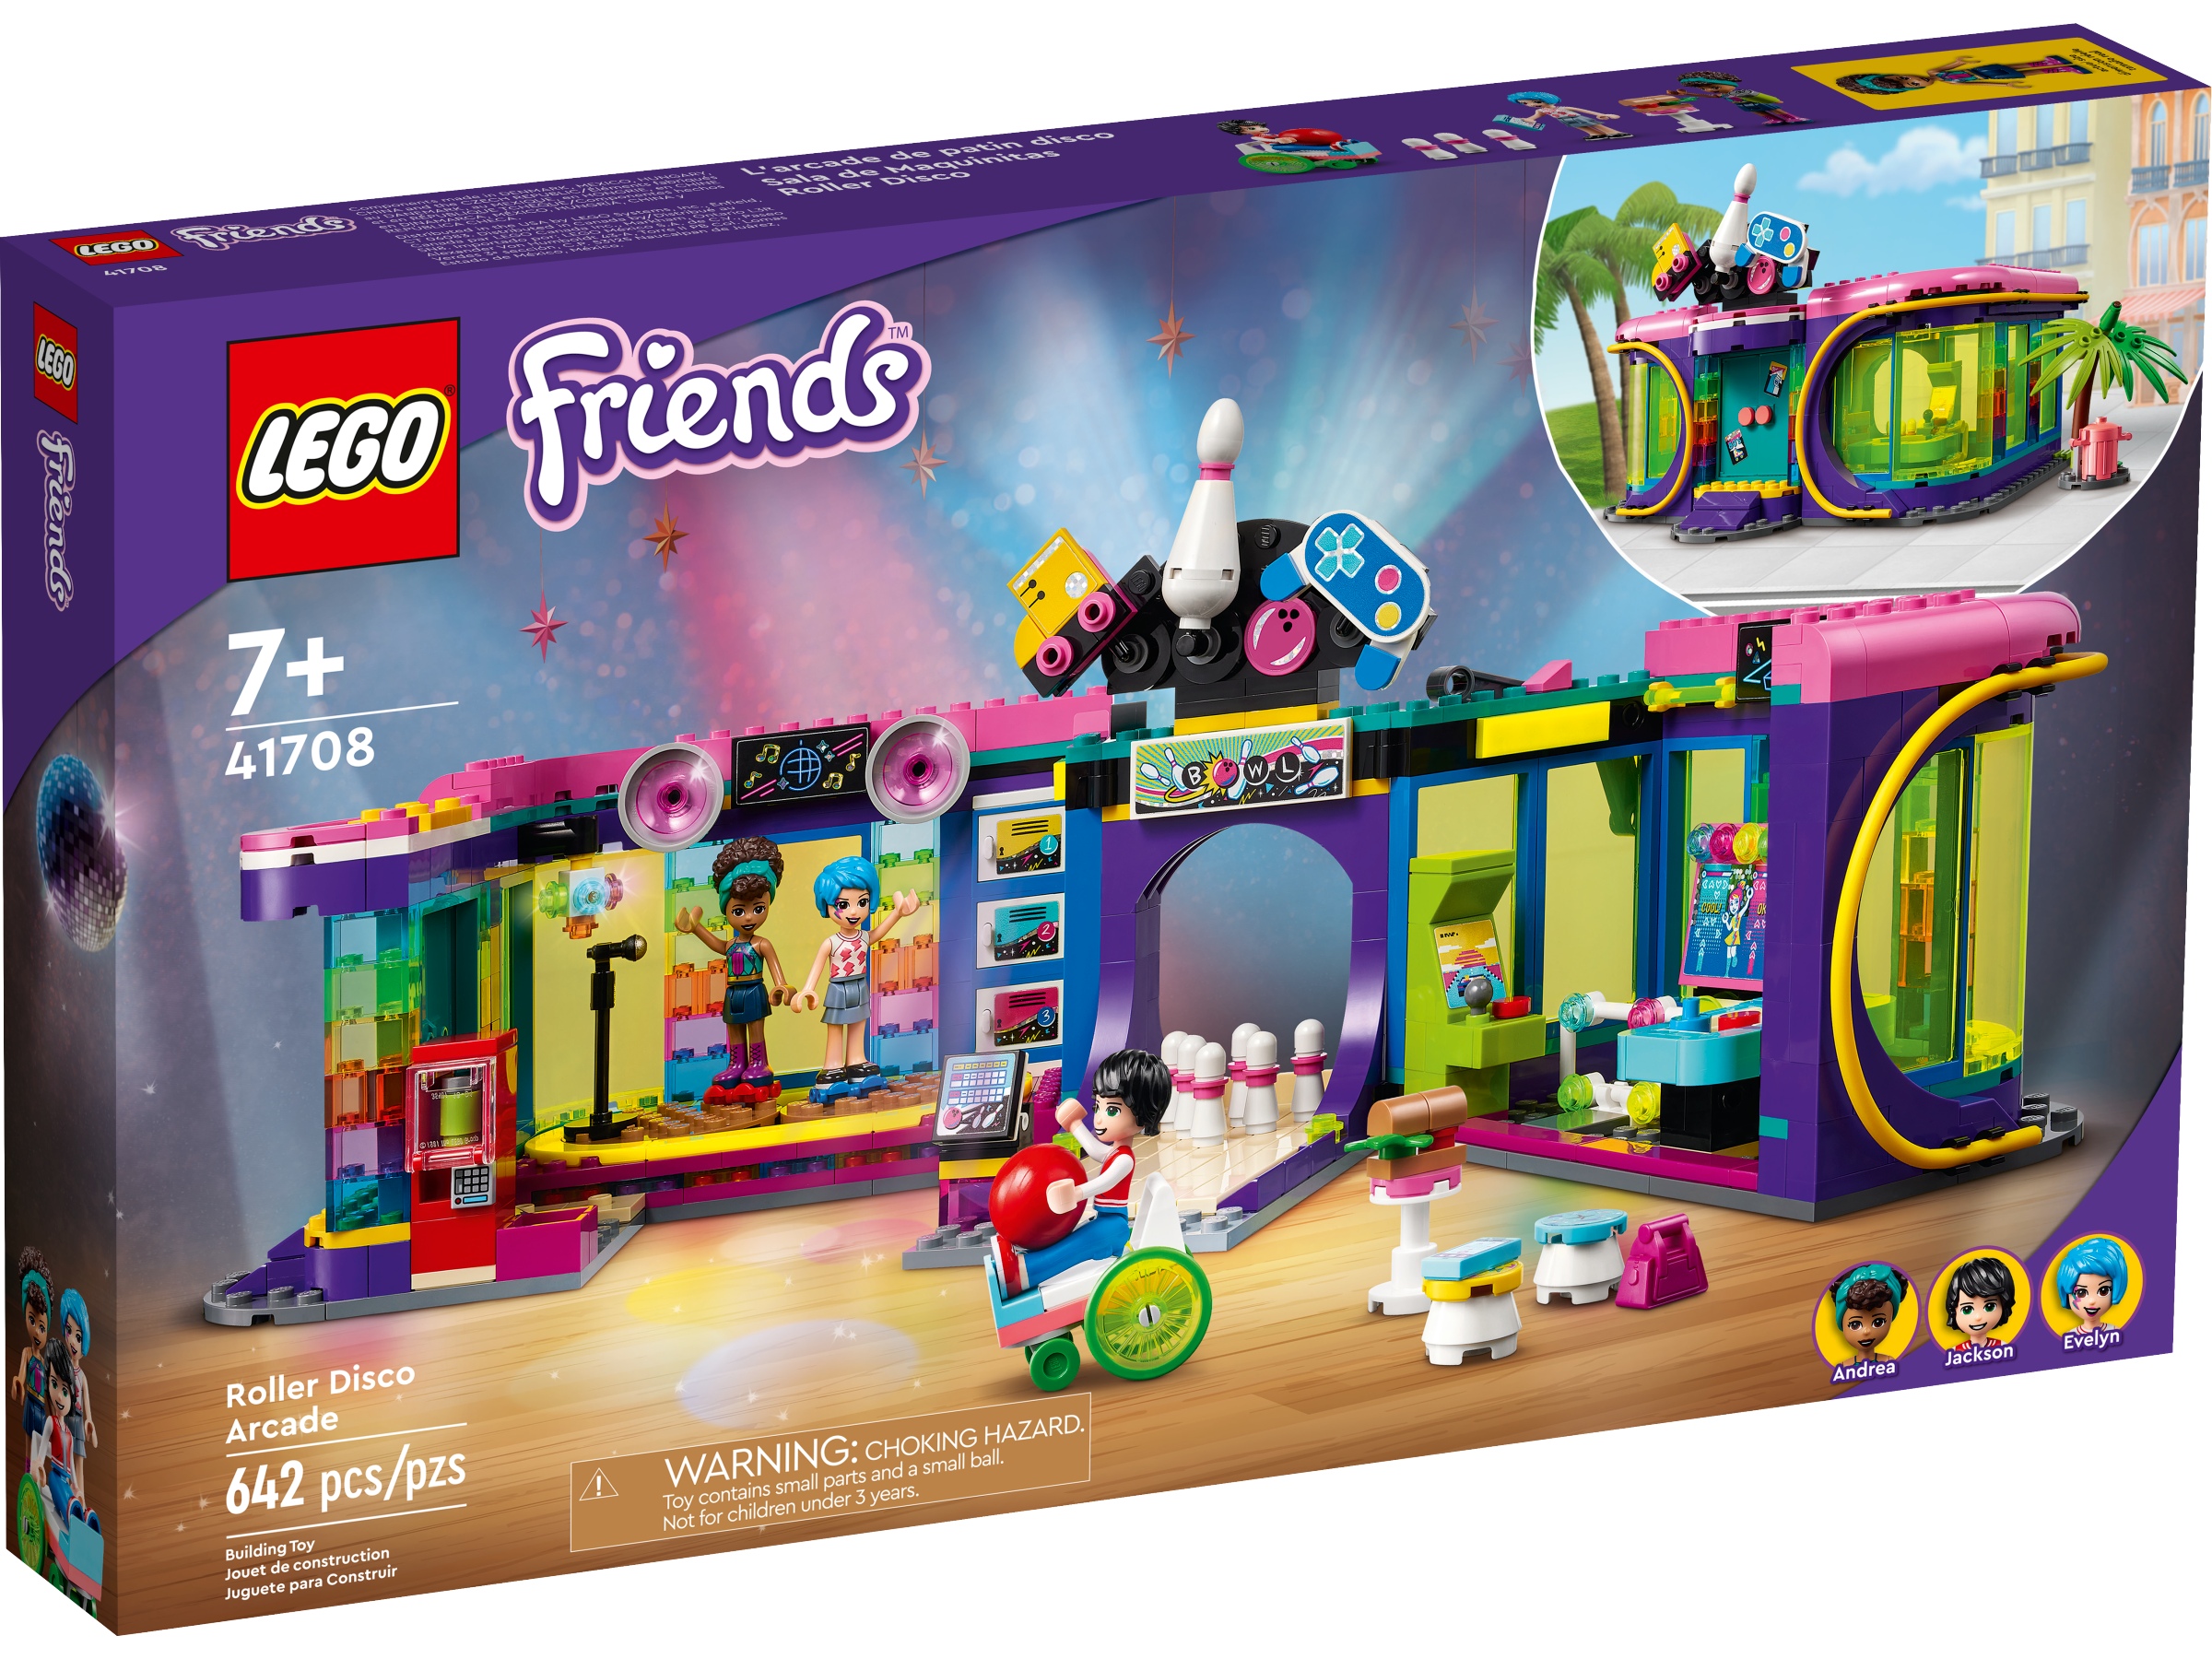 LEGO Friends: Roller Disco Arcade